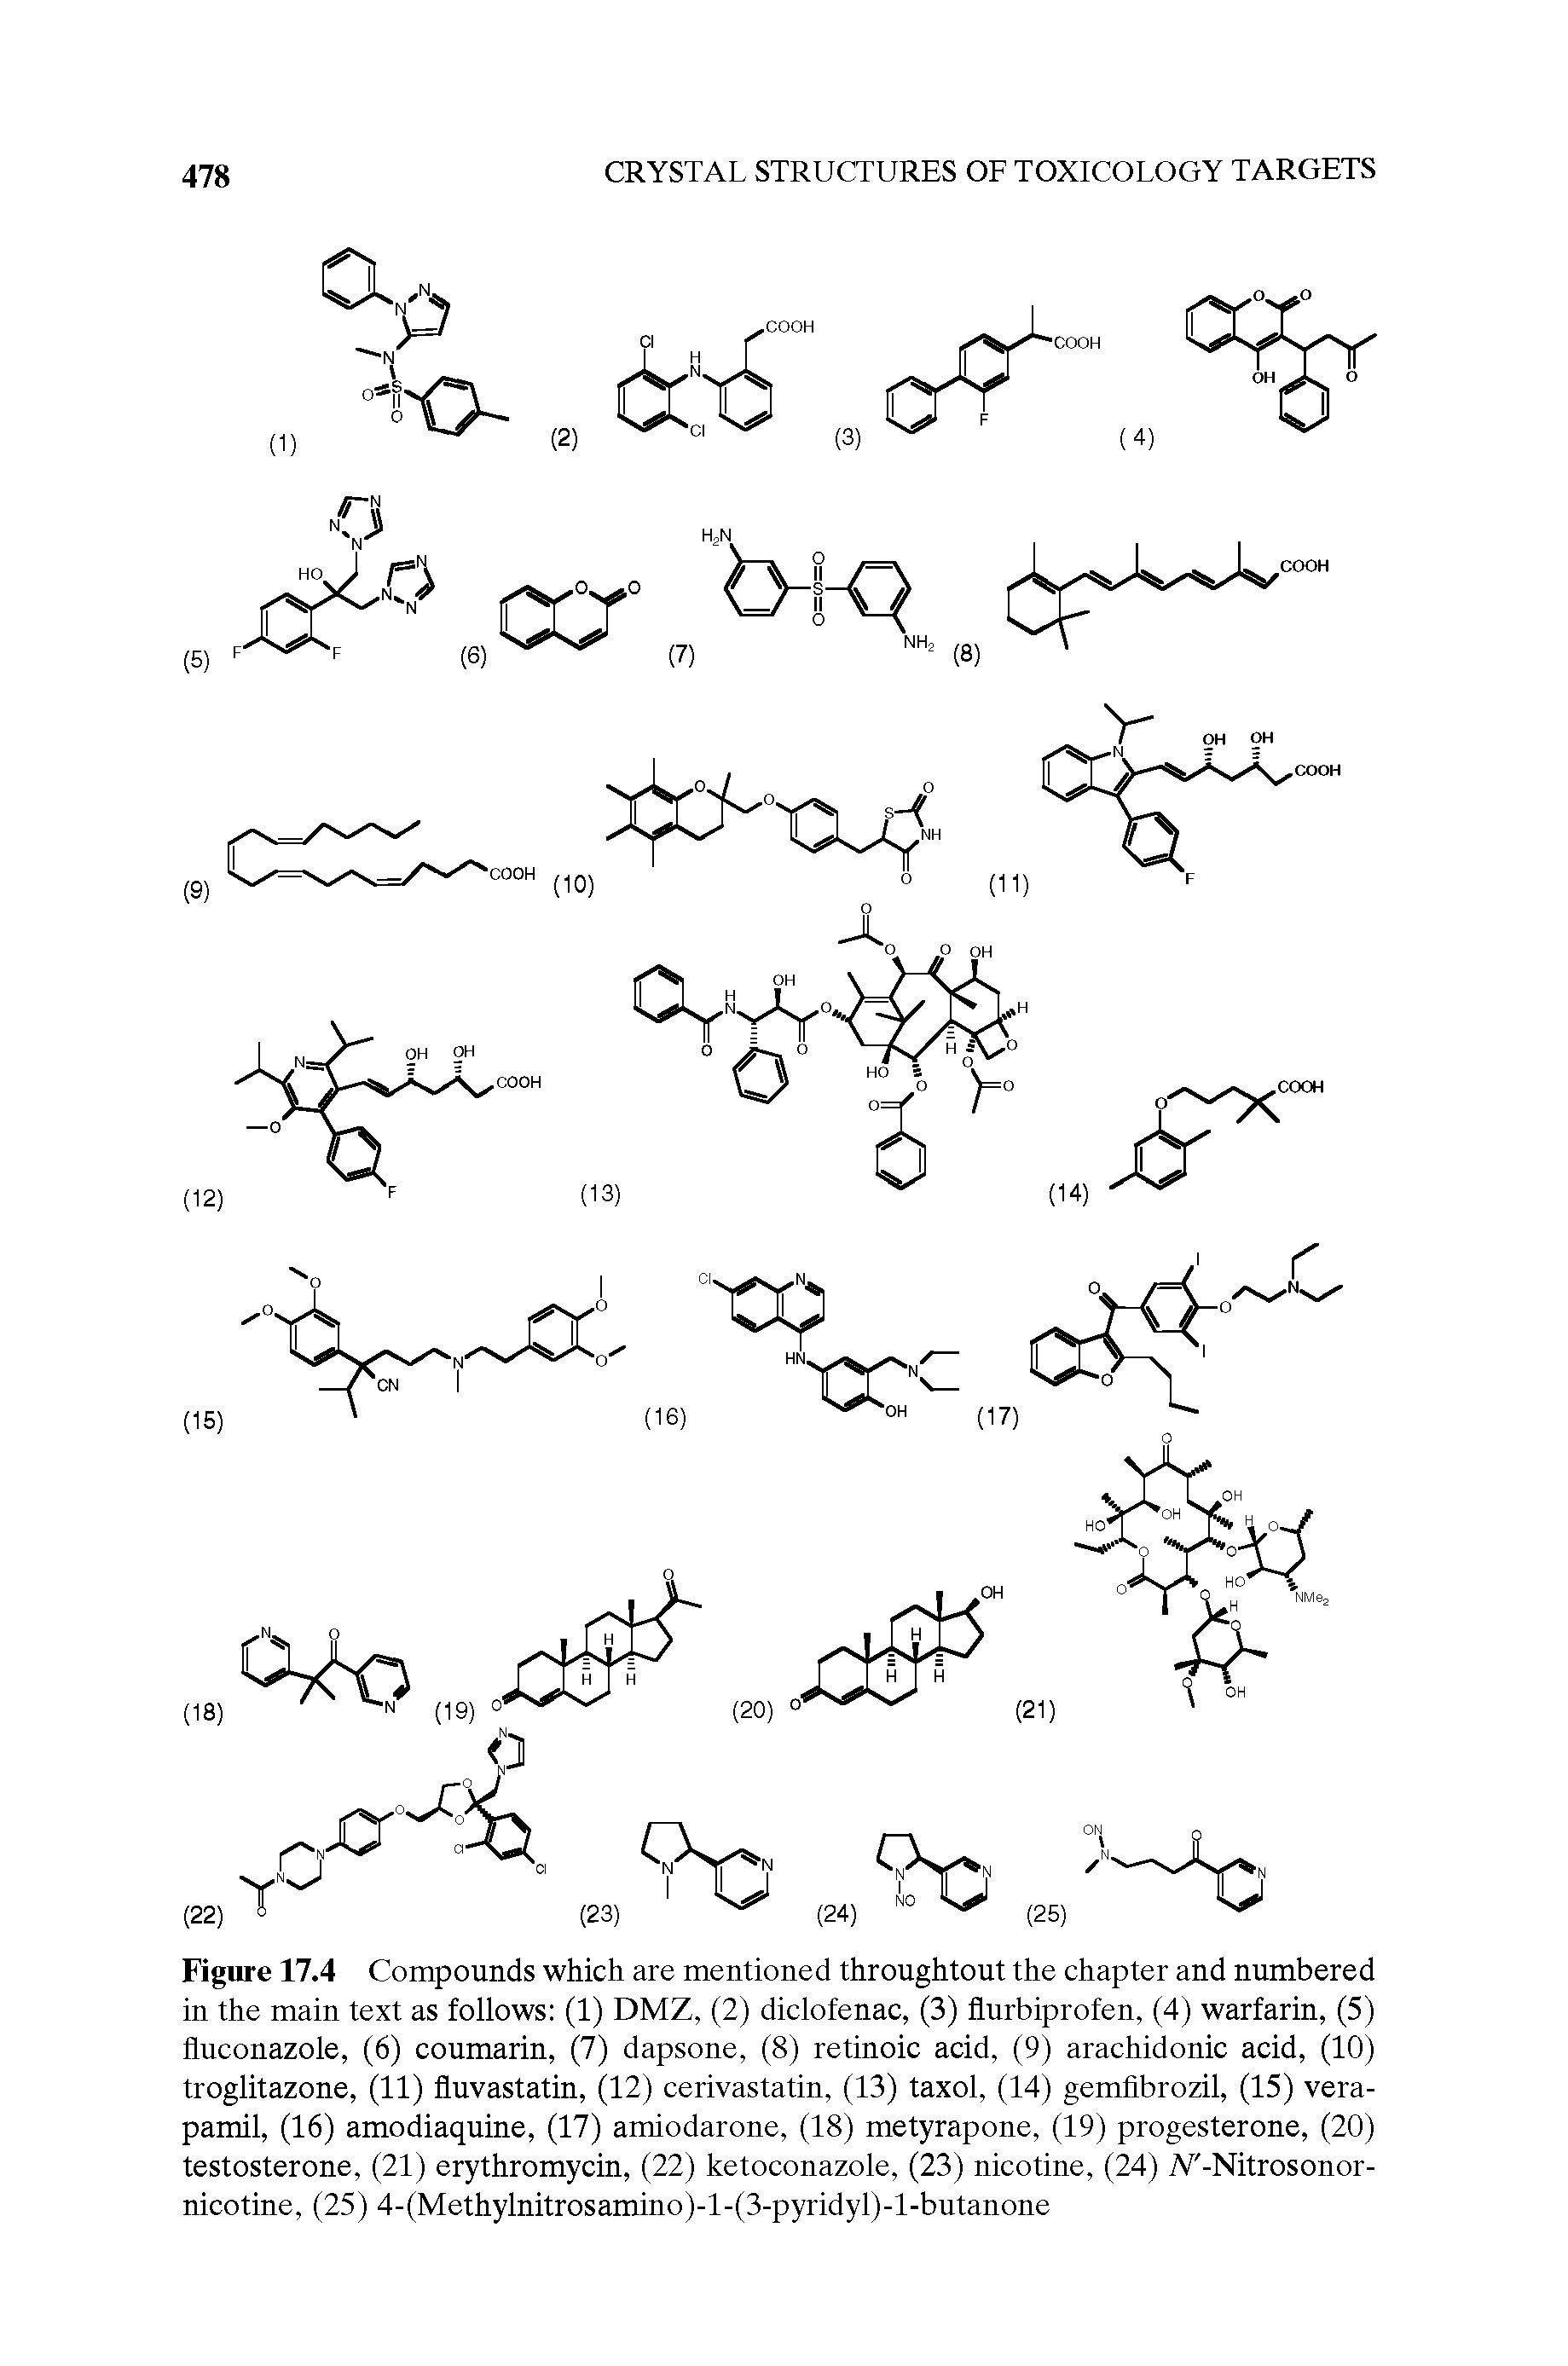 Figure 17.4 Compounds which are mentioned throughtout the chapter and numbered in the main text as follows (1) DMZ, (2) diclofenac, (3) flurbiprofen, (4) warfarin, (5) fluconazole, (6) coumarin, (7) dapsone, (8) retinoic acid, (9) arachidonic acid, (10) troglitazone, (11) fluvastatin, (12) cerivastatin, (13) taxol, (14) gemfibrozil, (15) verapamil, (16) amodiaquine, (17) amiodarone, (18) metyrapone, (19) progesterone, (20) testosterone, (21) erythromycin, (22) ketoconazole, (23) nicotine, (24) IV -Nitrosonor-nicotine, (25) 4-(Methylnitrosamino)-l-(3-pyridyl)-l-butanone...